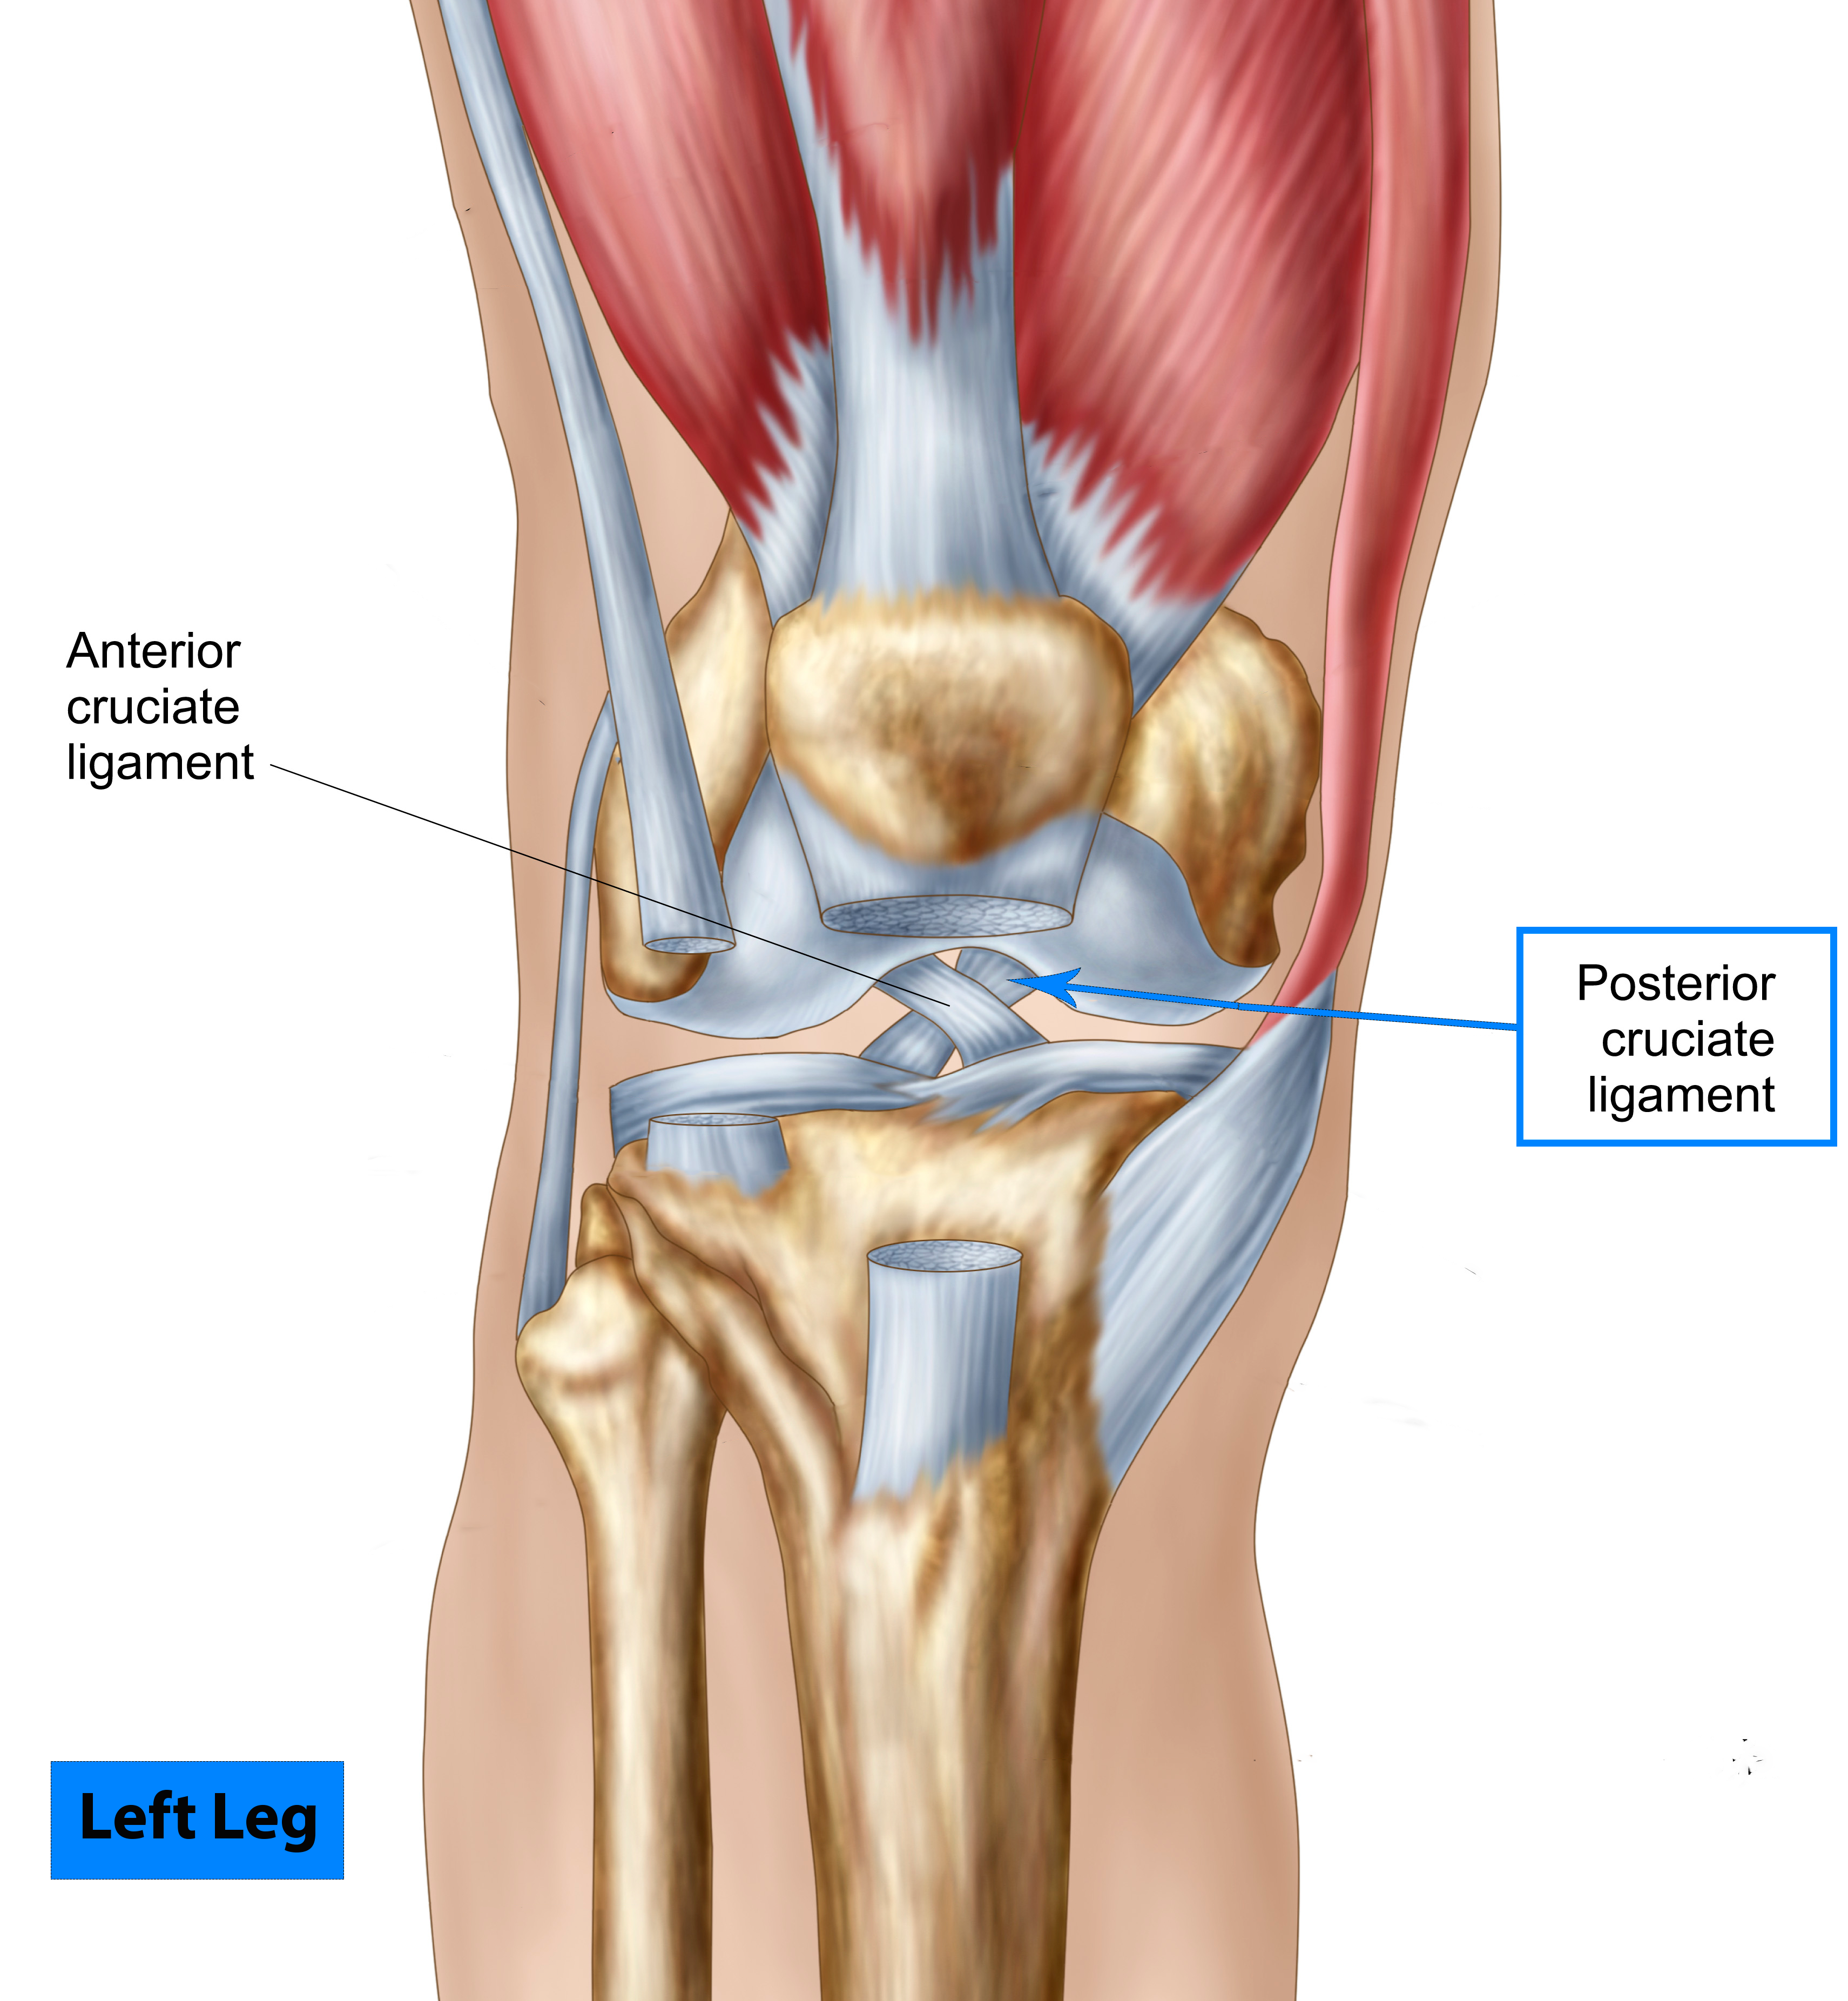 Posterior Cruciate Ligament Injury